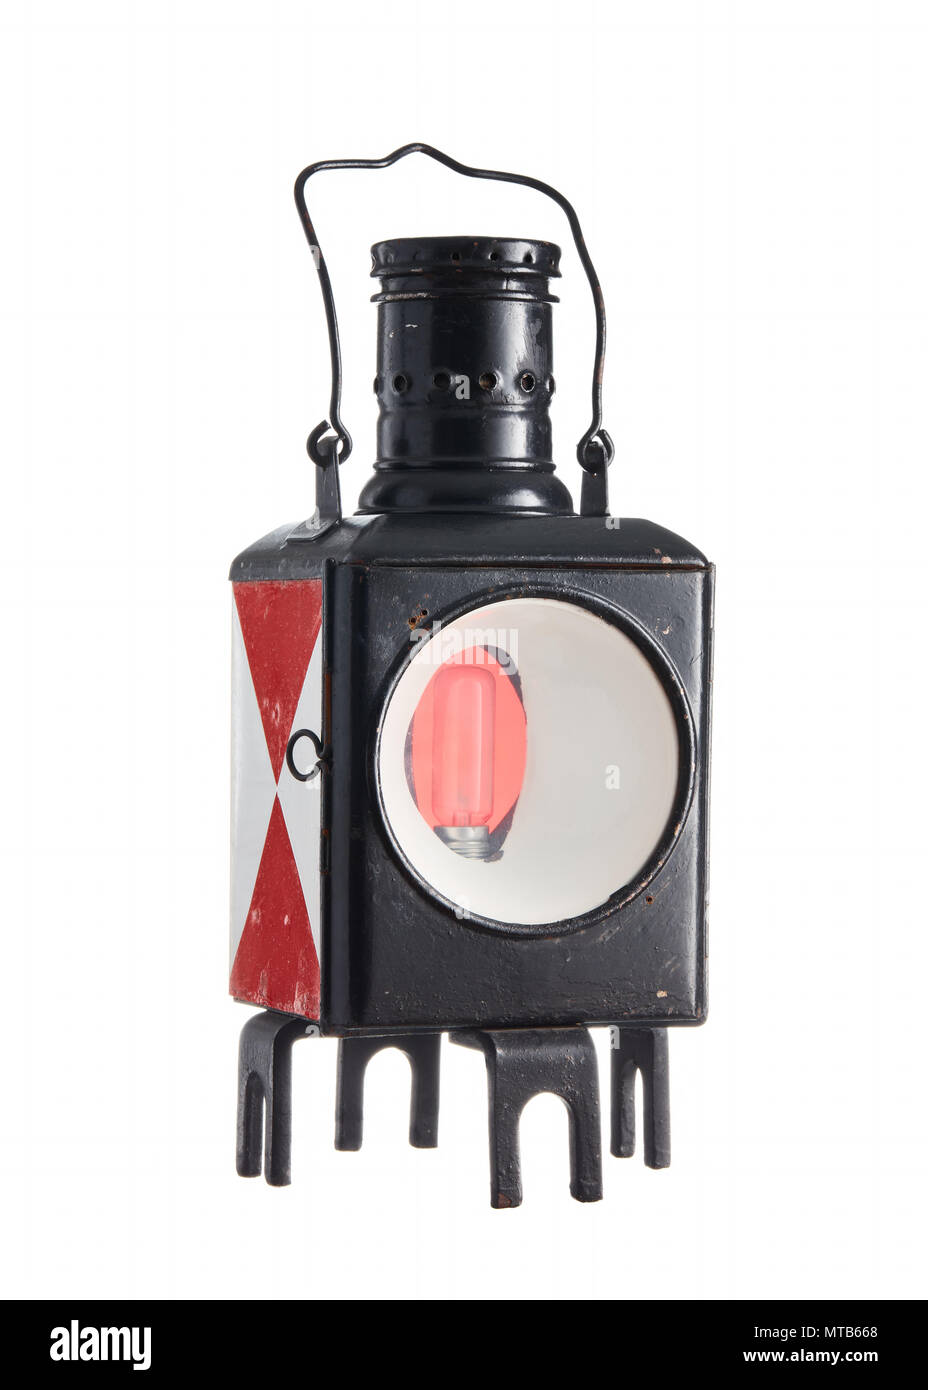 Antique vintage railway signal lamp isolated on white background Stock Photo